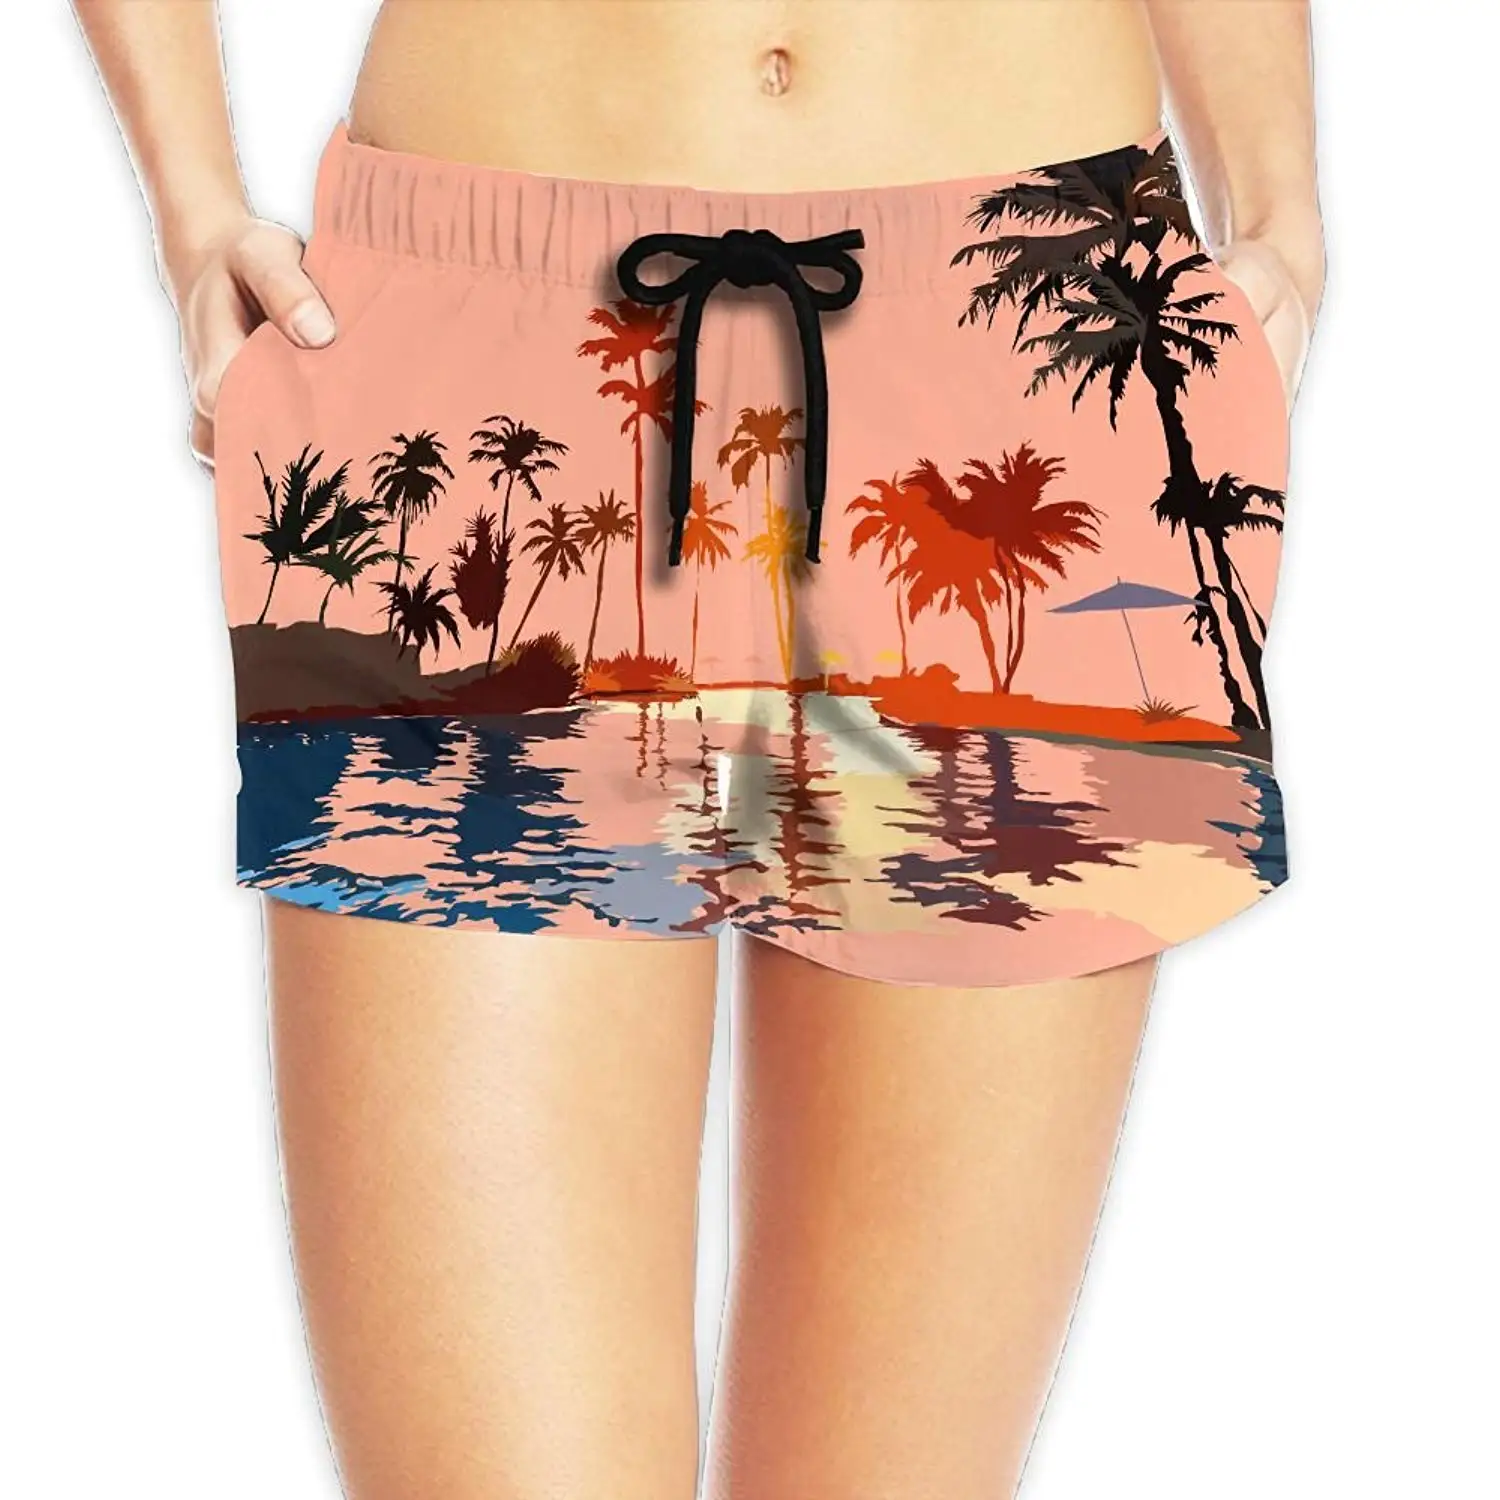 FullBo Decor Popular Color Art Mandala Little Boys Short Swim Trunks Quick Dry Beach Shorts